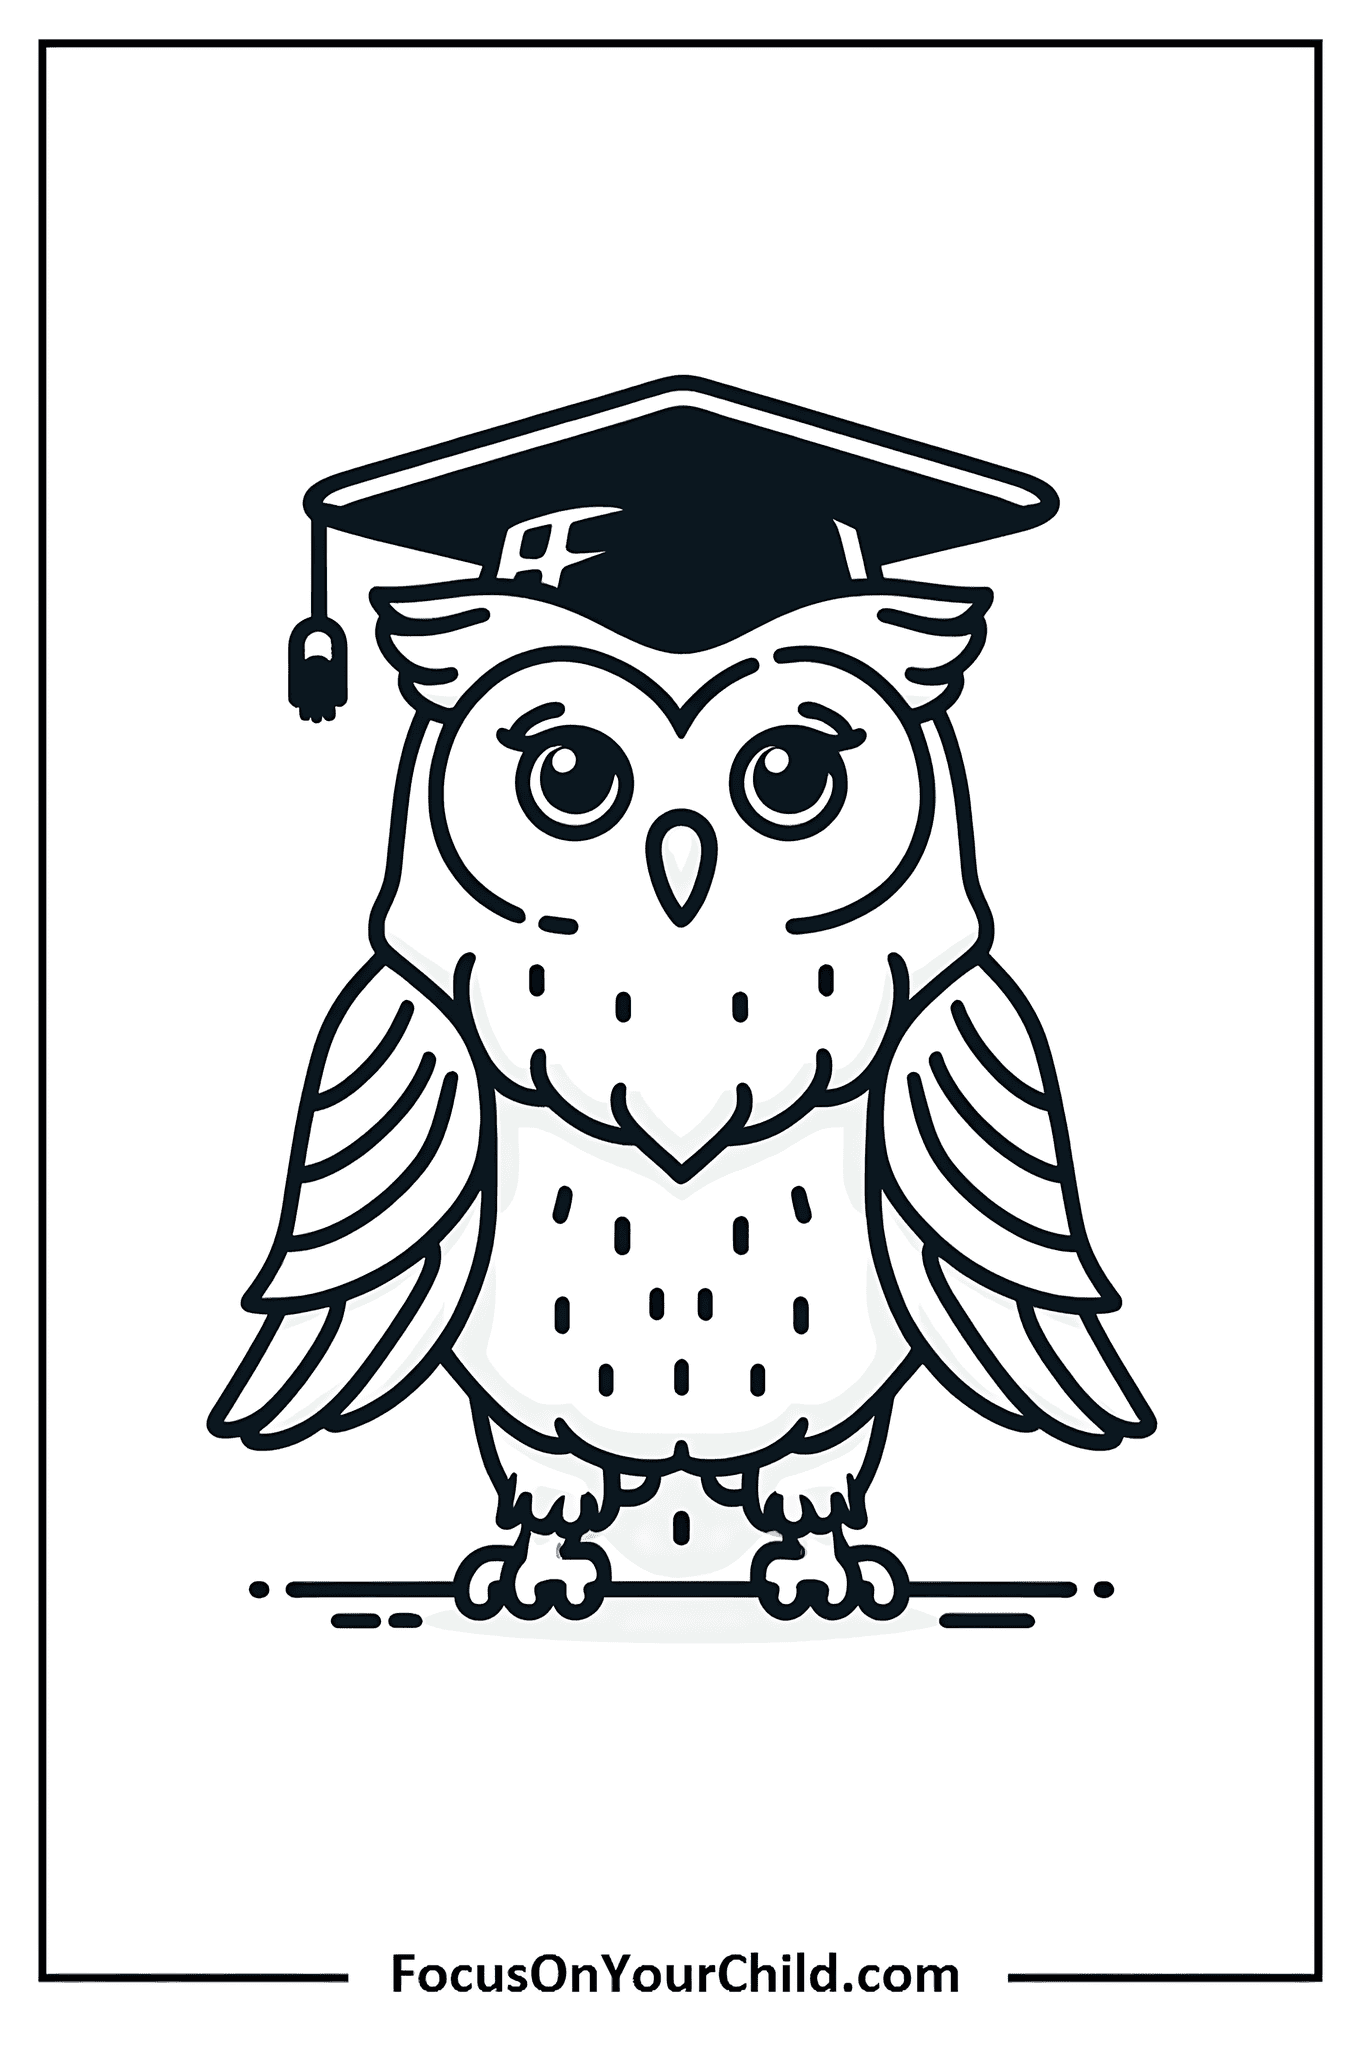 Stylized owl with graduation cap, symbolizing wisdom, learning, and academic achievement.